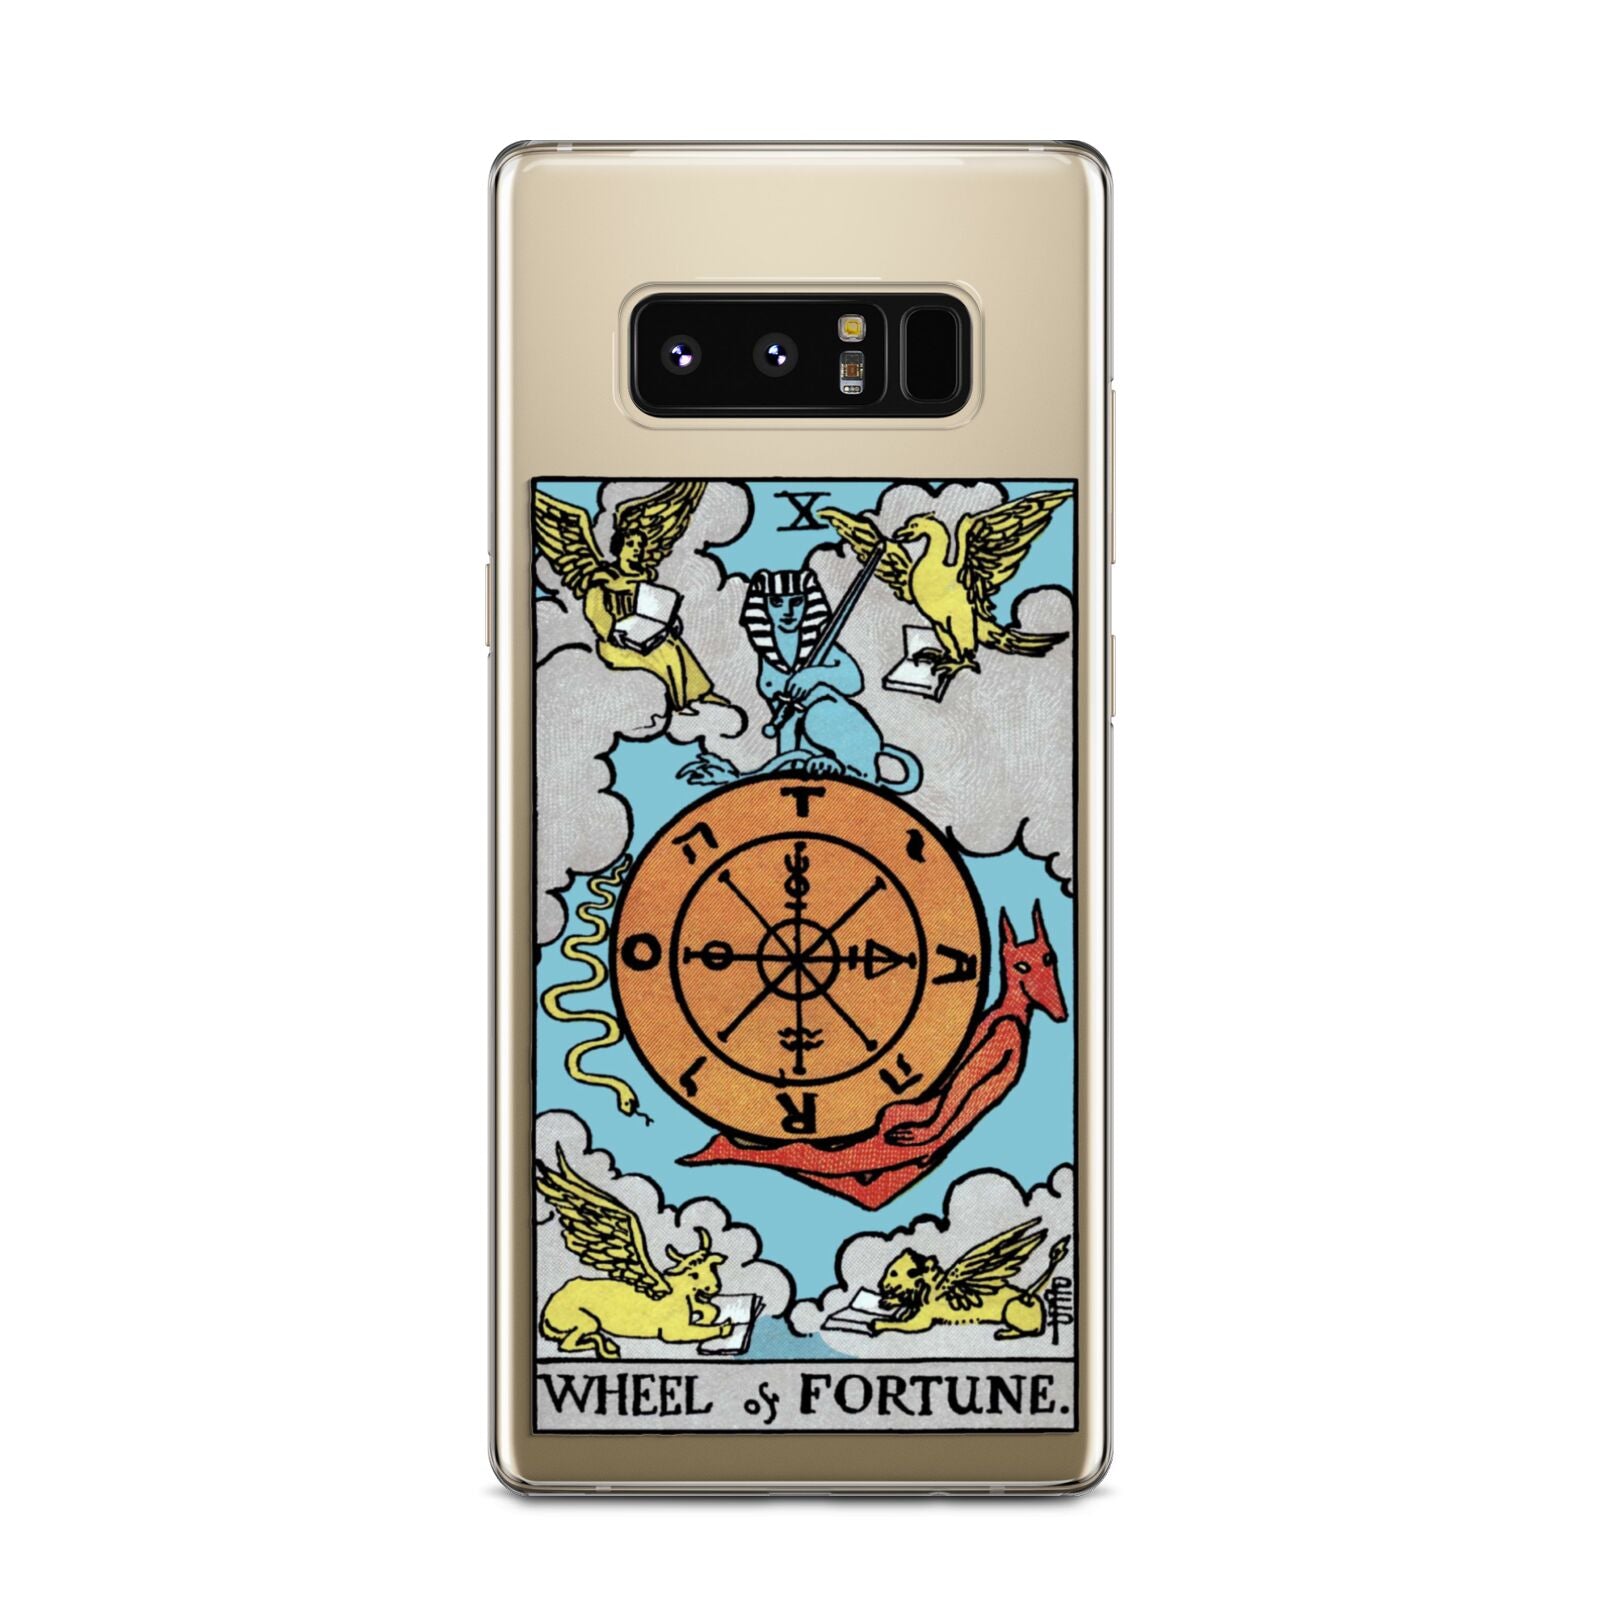 Wheel of Fortune Tarot Card Samsung Galaxy Note 8 Case